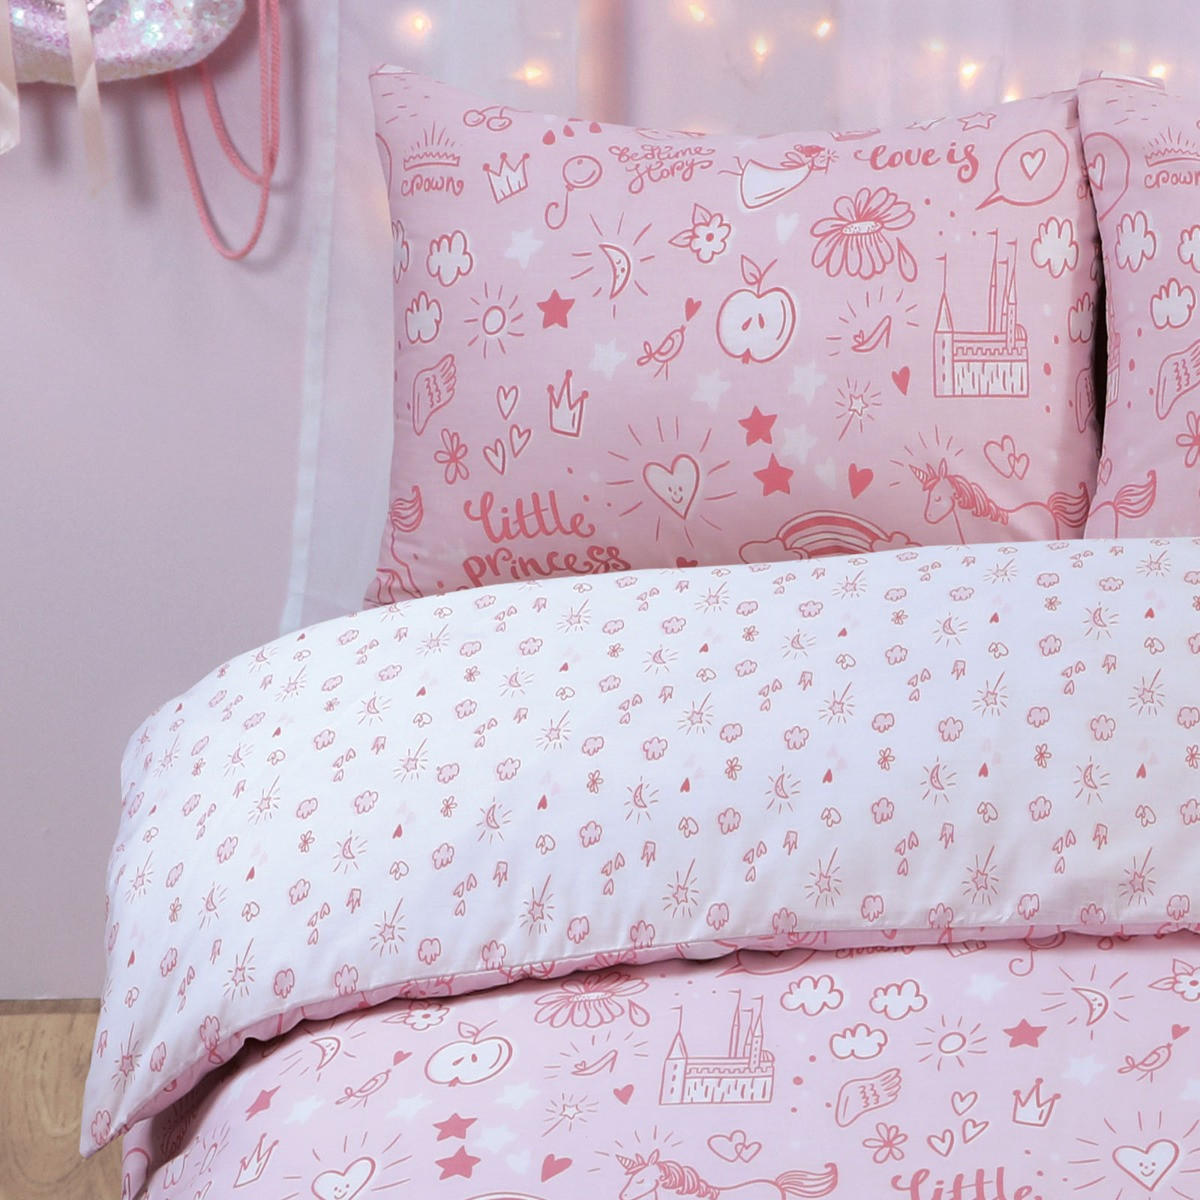 Dreamscene Little Princess Duvet Set - Blush Pink>